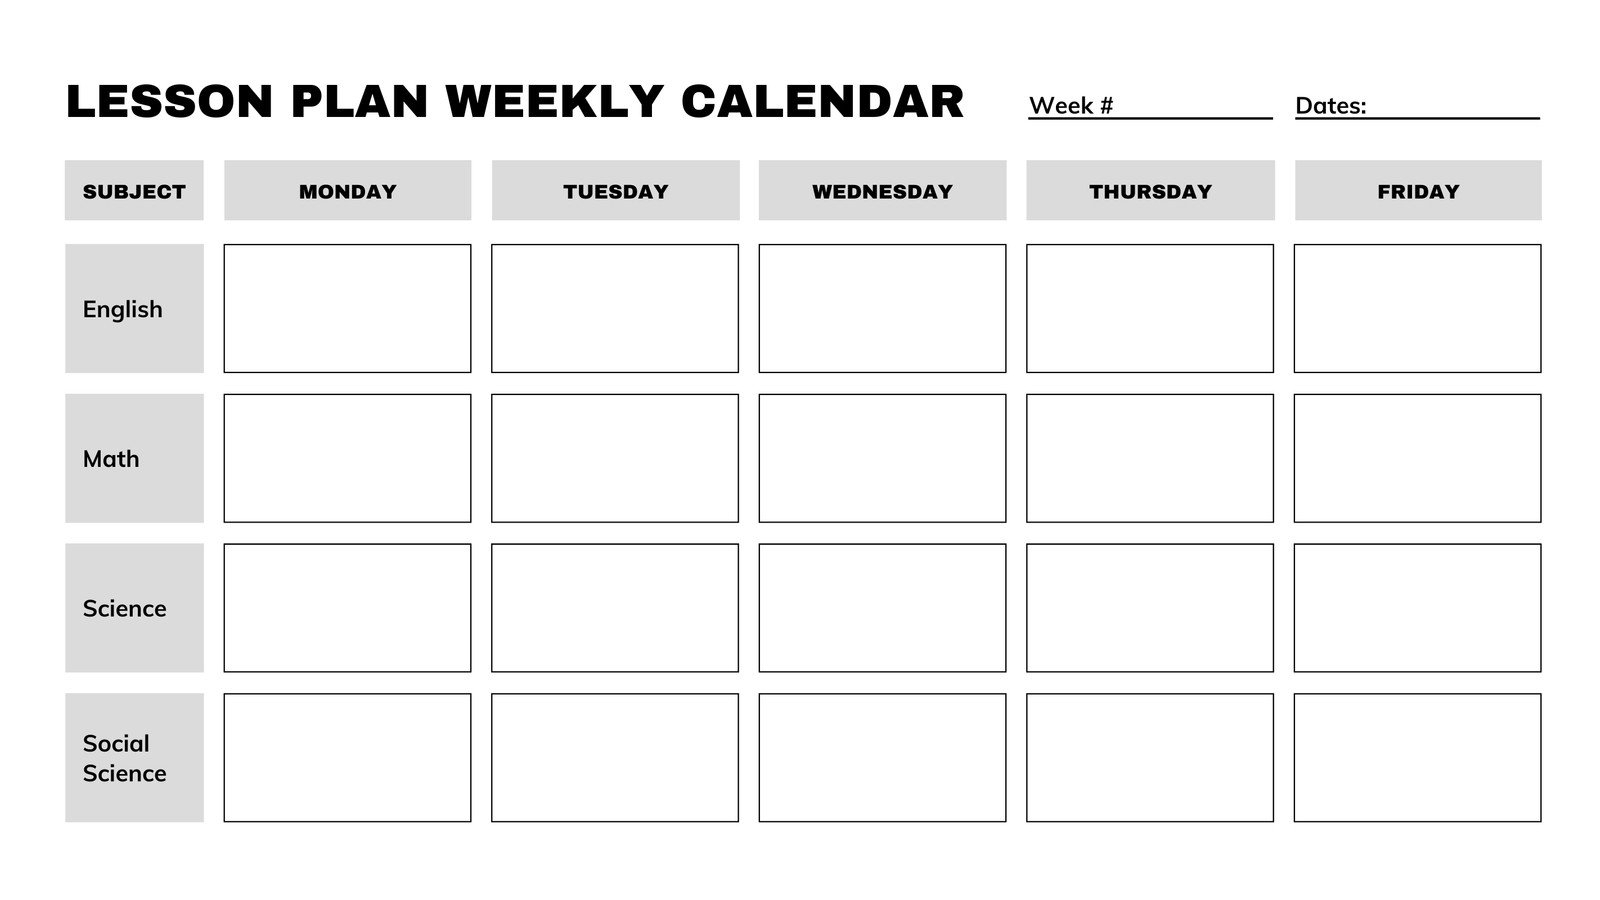 Free, printable, customizable weekly calendar templates  Canva